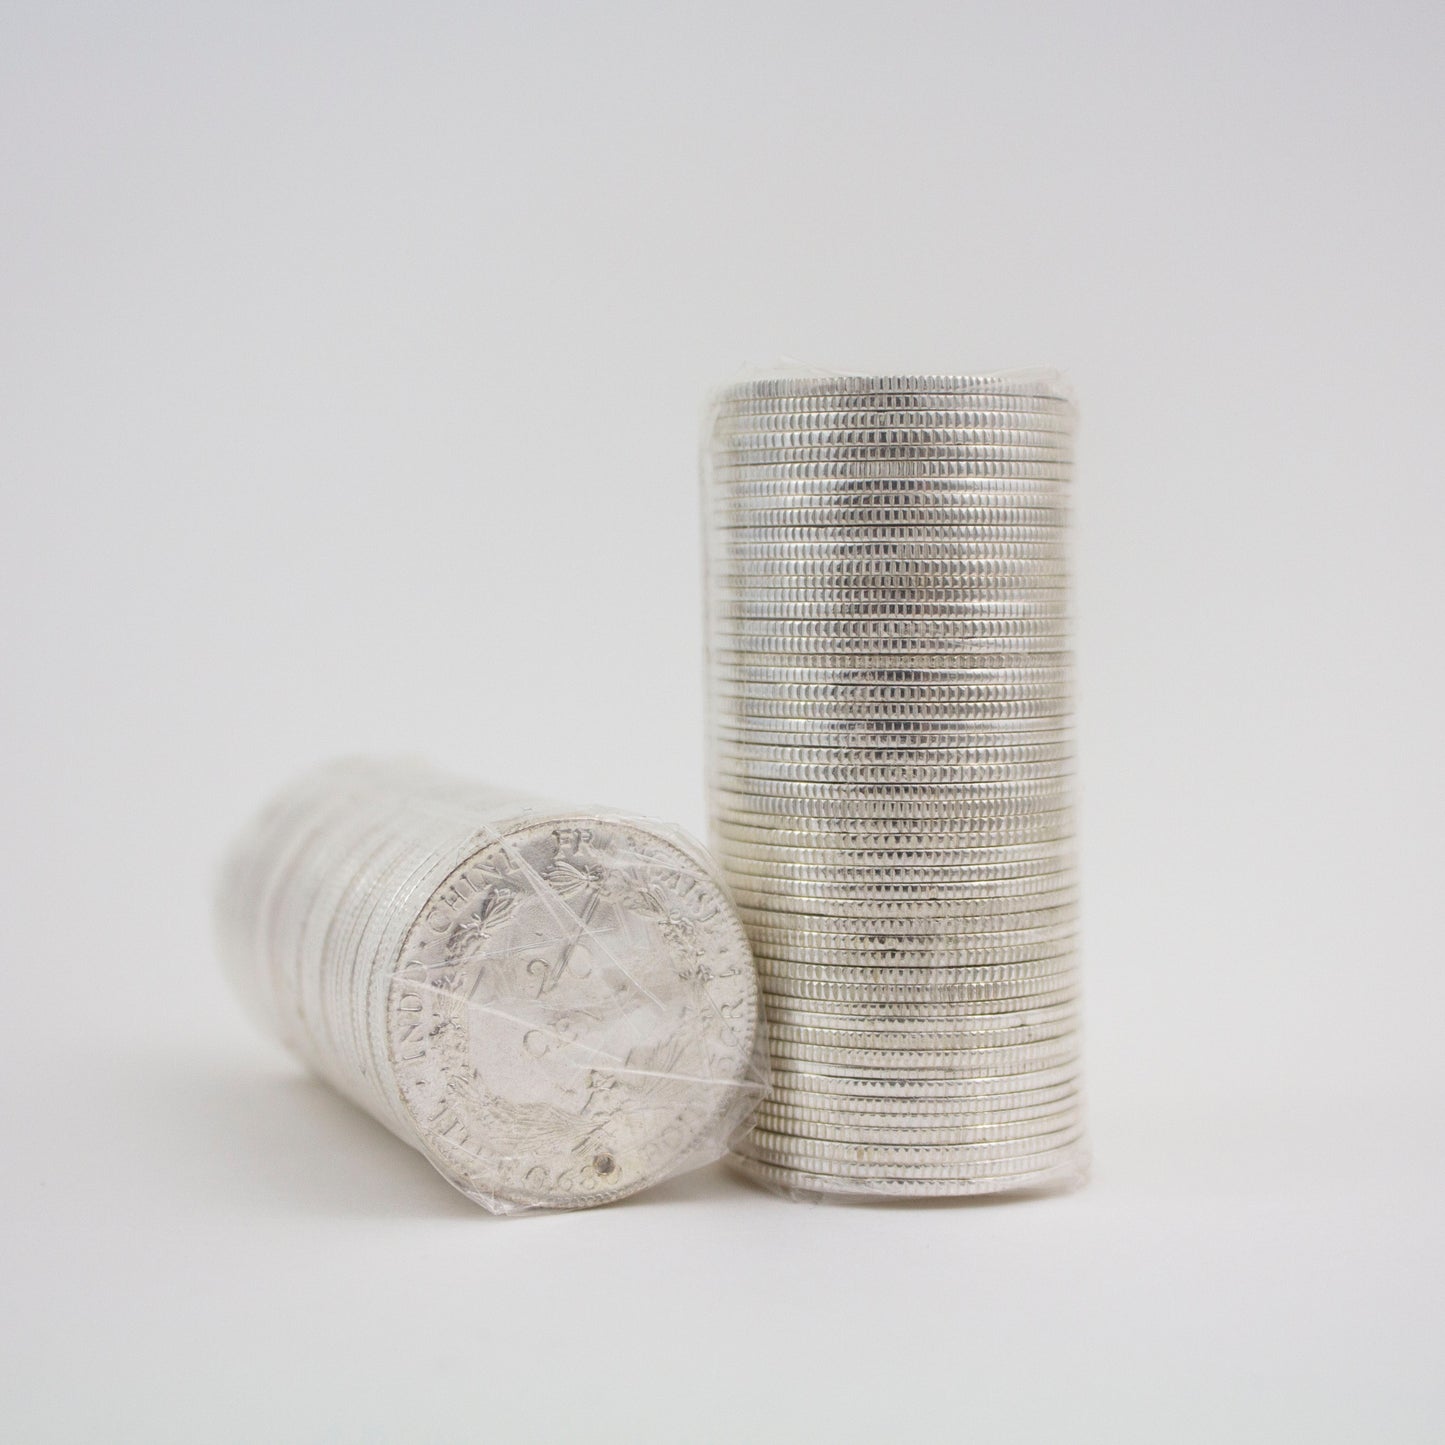 Hmong Coins Money 2 - 1 Roll Quarter Size Coins (50 coins)